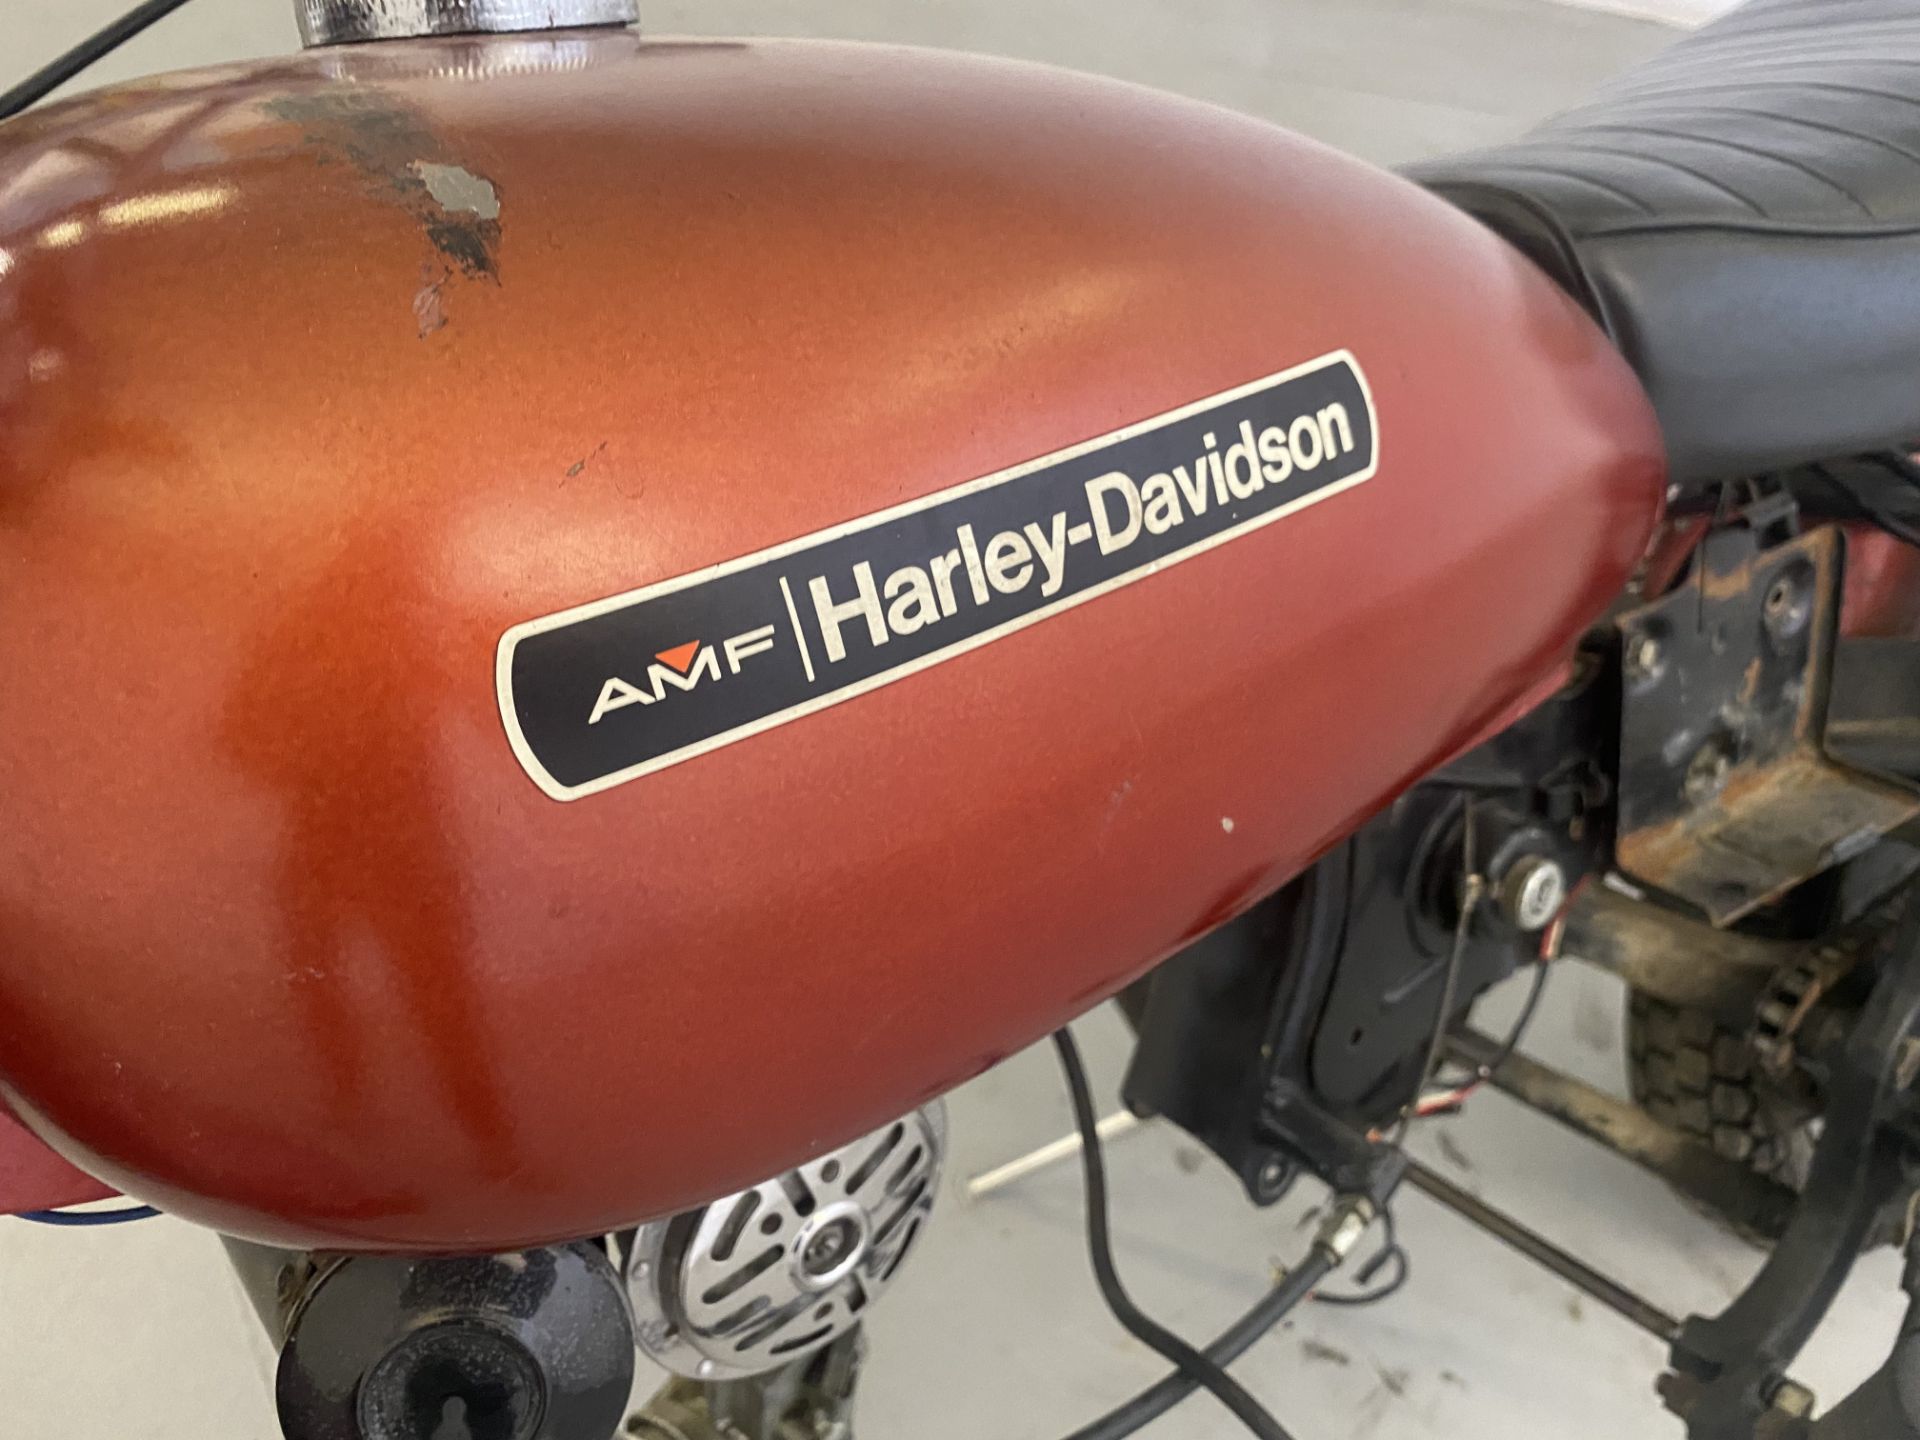 Aermacchi Harley Davidson Sprint - Image 16 of 17